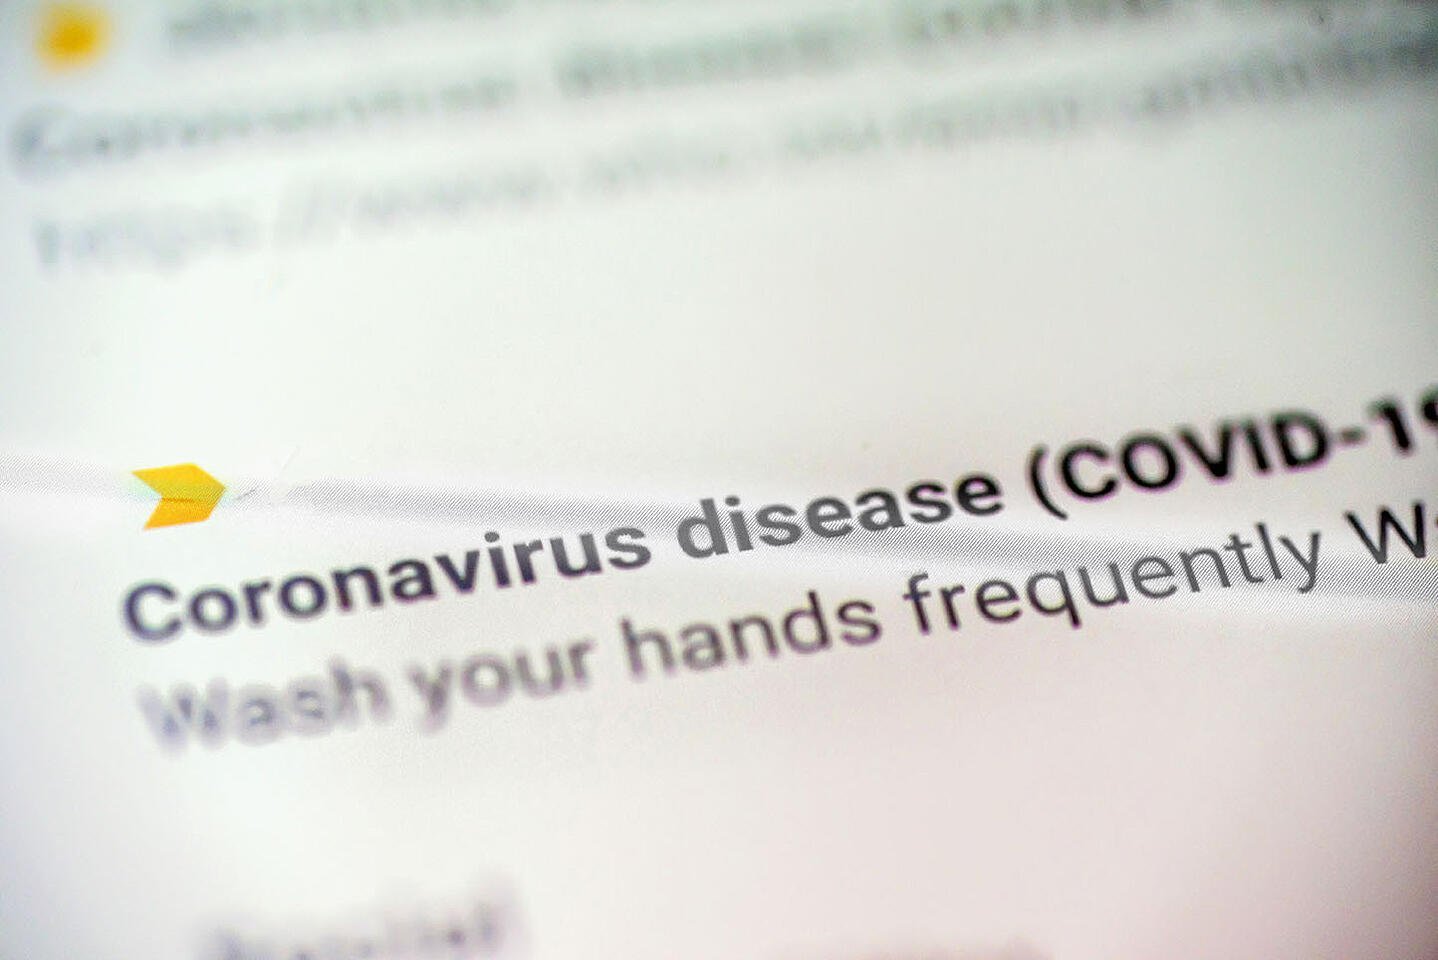 Coronavirus Crisis Communication: a Wicked Problem